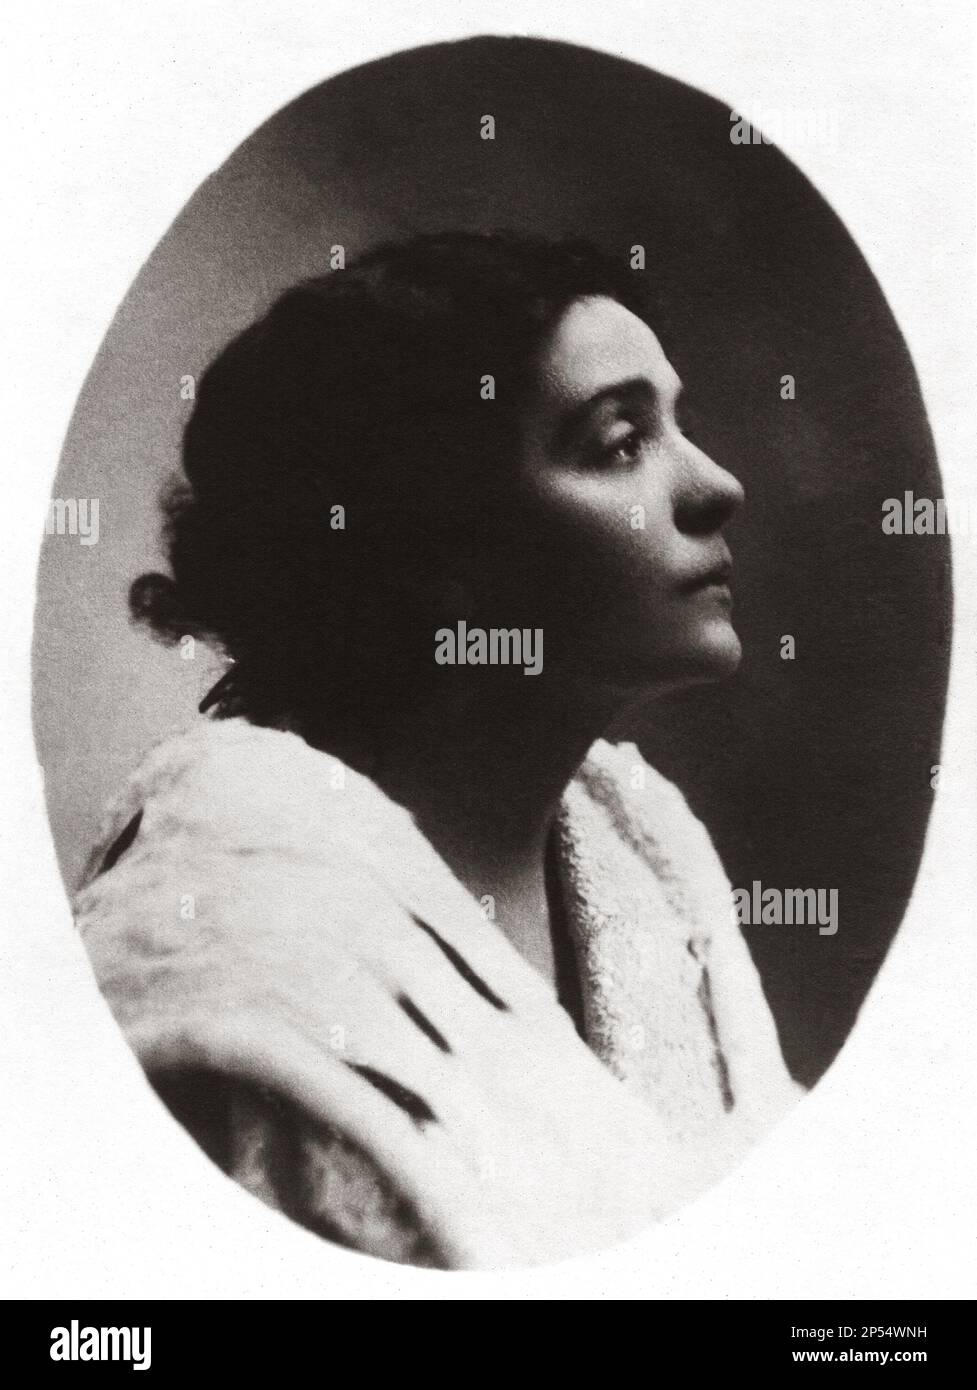 1880 c, ITALIEN : die berühmteste italienische Schauspielerin ELEONORA DUSE ( 1858 - 1924 ), Berühmte Geliebte des Dichters Gabriele D'Annunzio .- TEATRO - THEATRE - DANNUNZIO - D' ANNUNZIO - pelliccia ermellino - ermine - fur - profilo - Profile - DIVA - DIVINA - attrice teatrale - D' Annunzio --- Archivio GBB Stockfoto